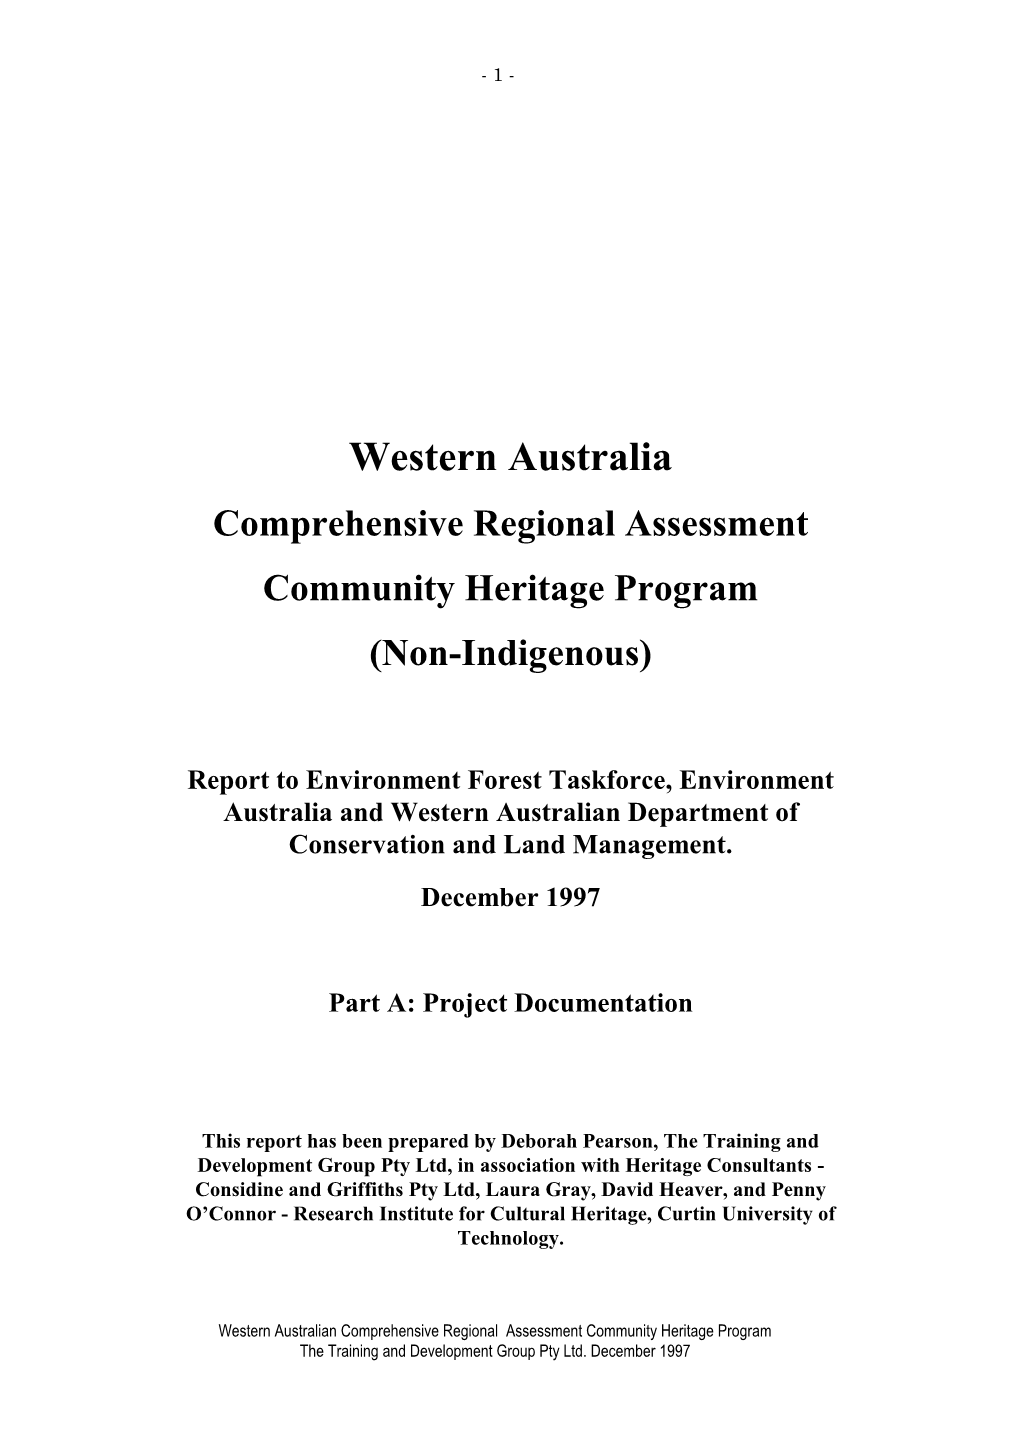 Western Australia Comprehensive Regional Assessment Community Heritage Program (Non-Indigenous)